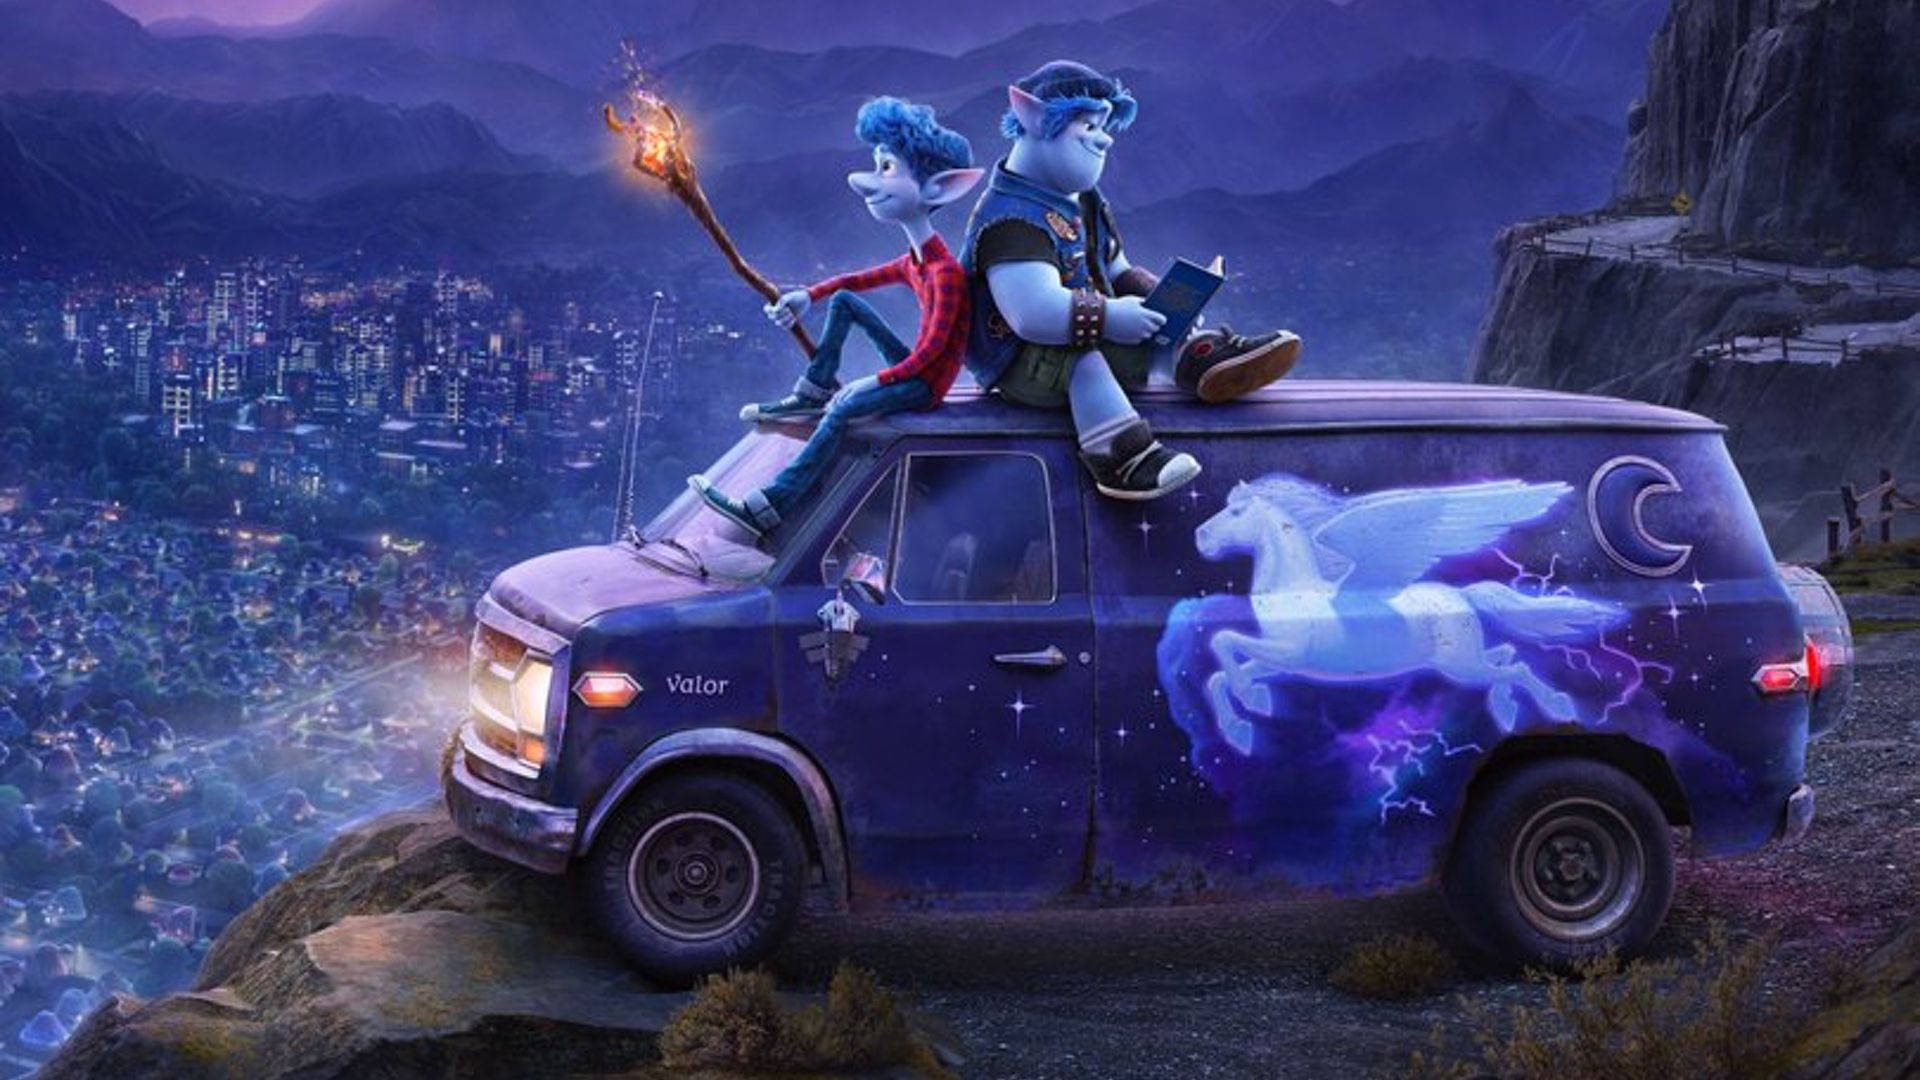 for Pixar's New Fantasy Adventure Film ONWARD with Chris Pratt and Tom Holland